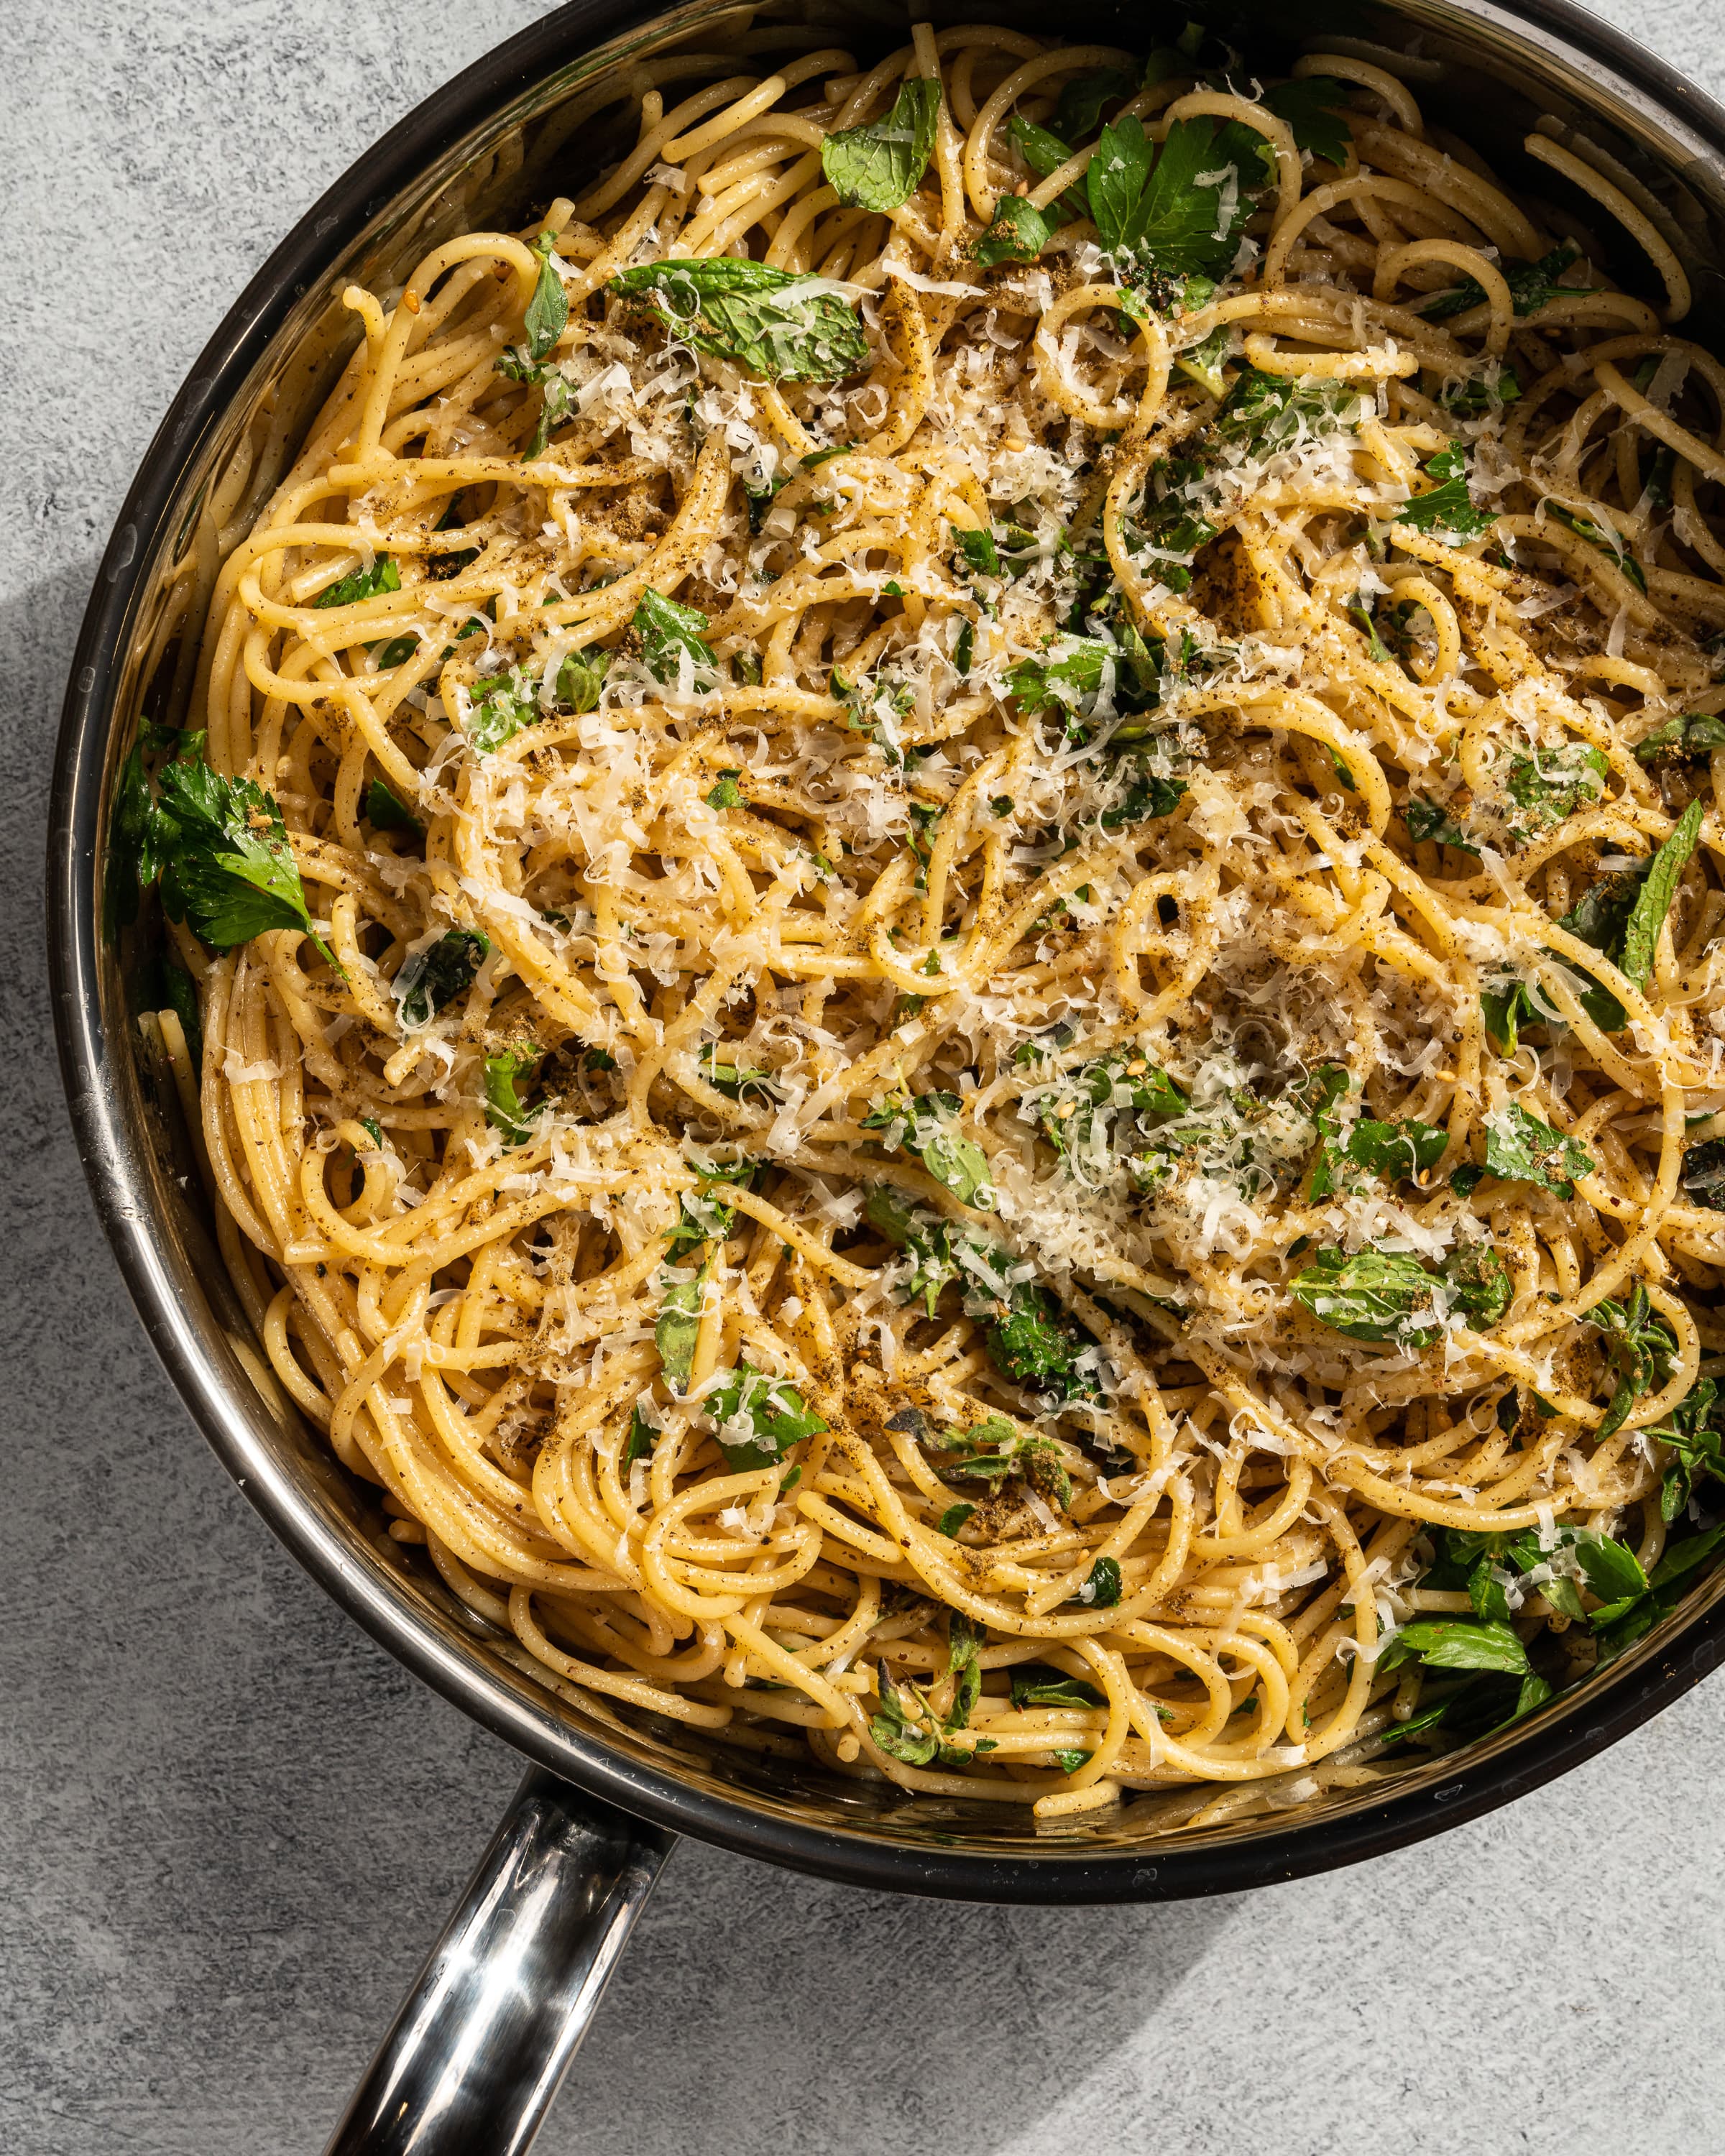 Italian Kitchenware: 5 Of My Best Picks For 2023 - The Pasta Artist